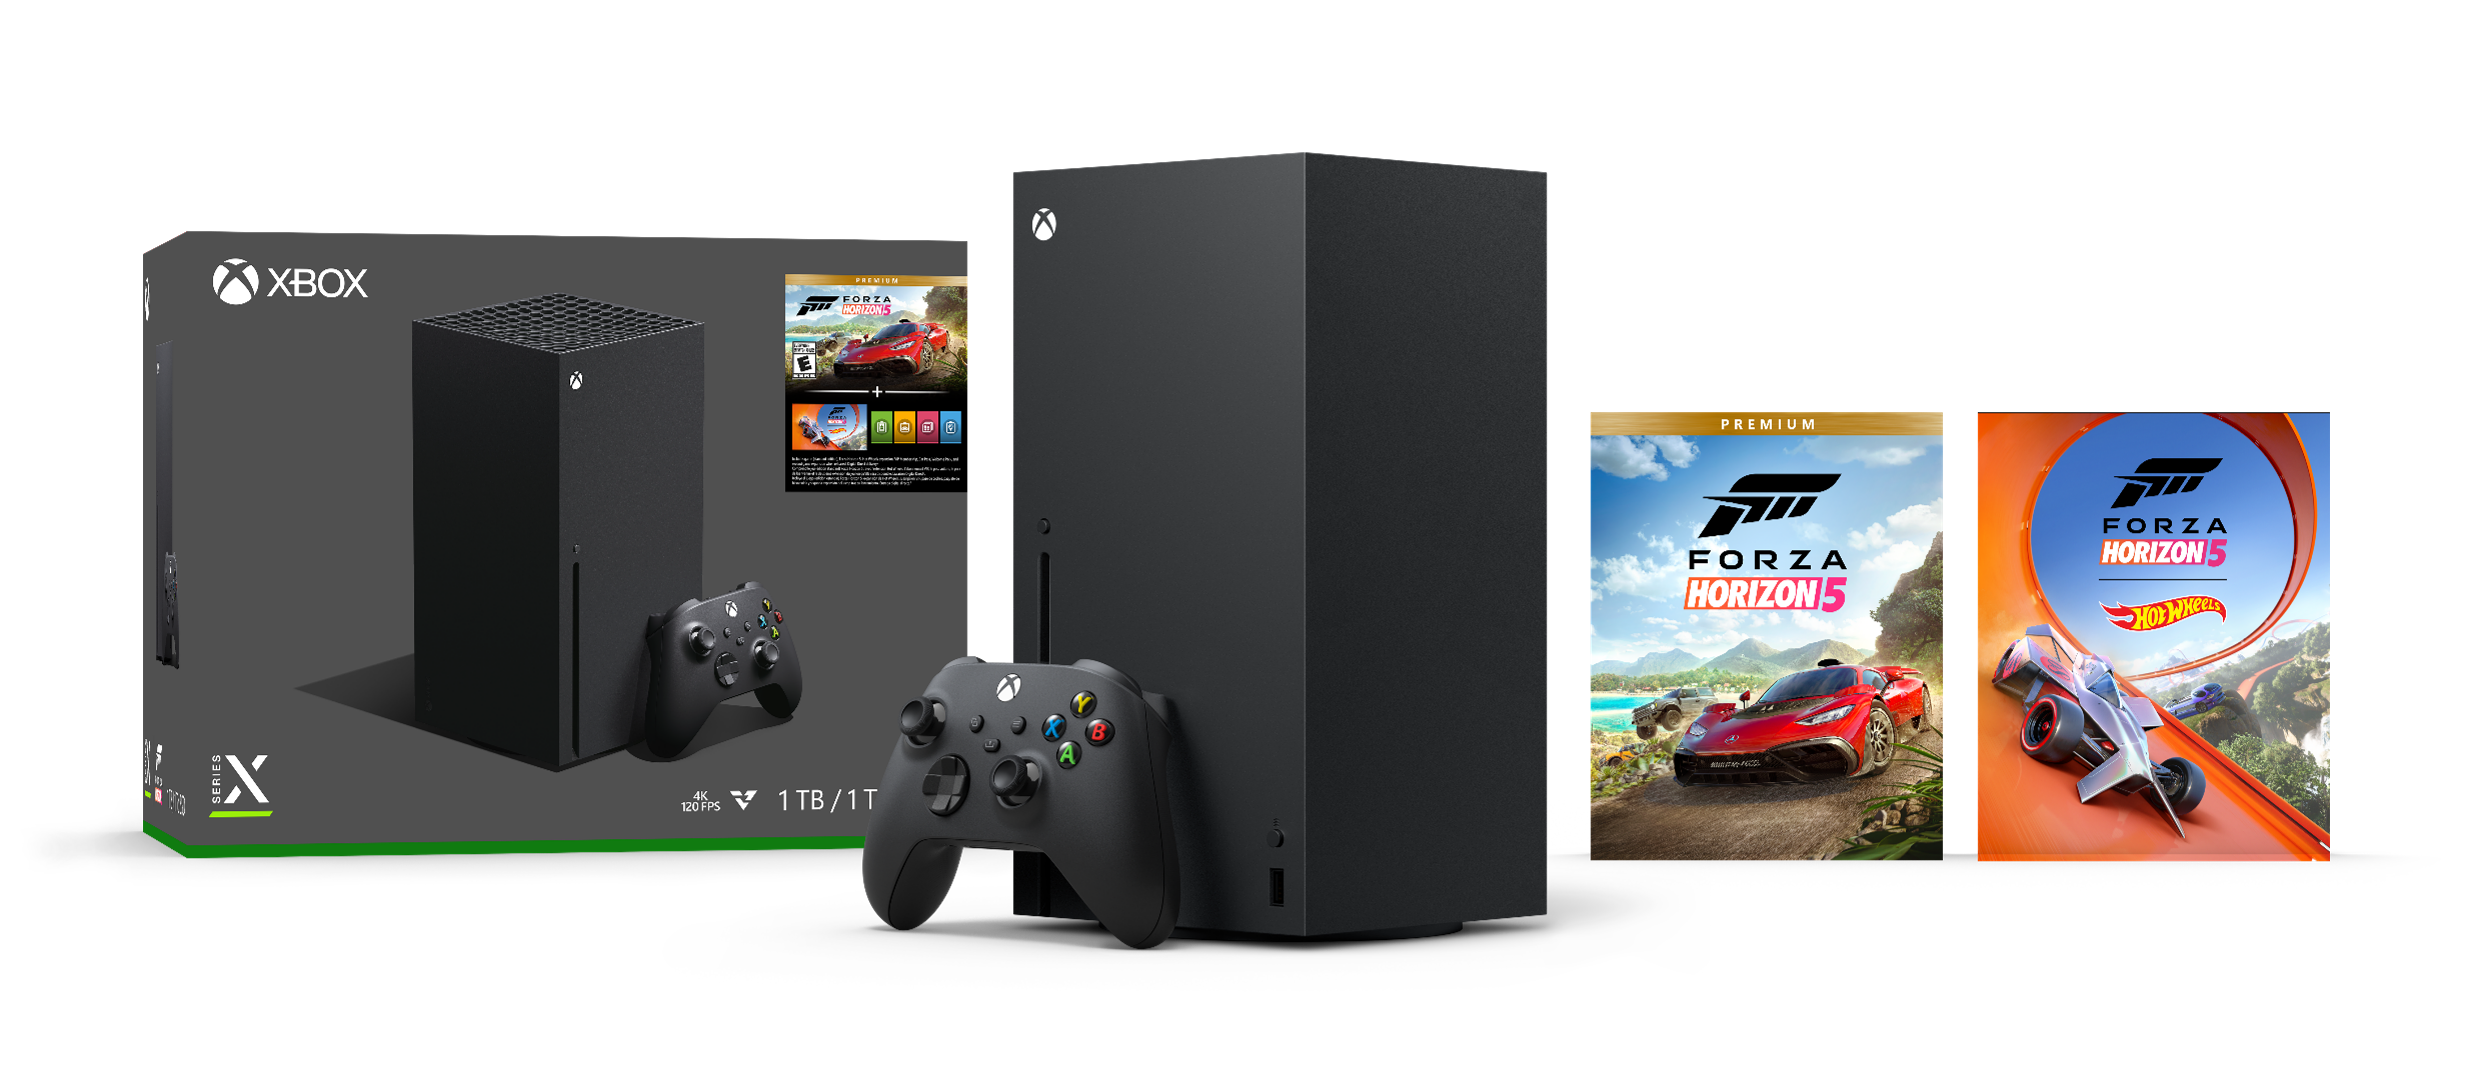 Xbox Series X (Forza Horizon 5 同梱版)」2 月 17 日より発売 ~究極の